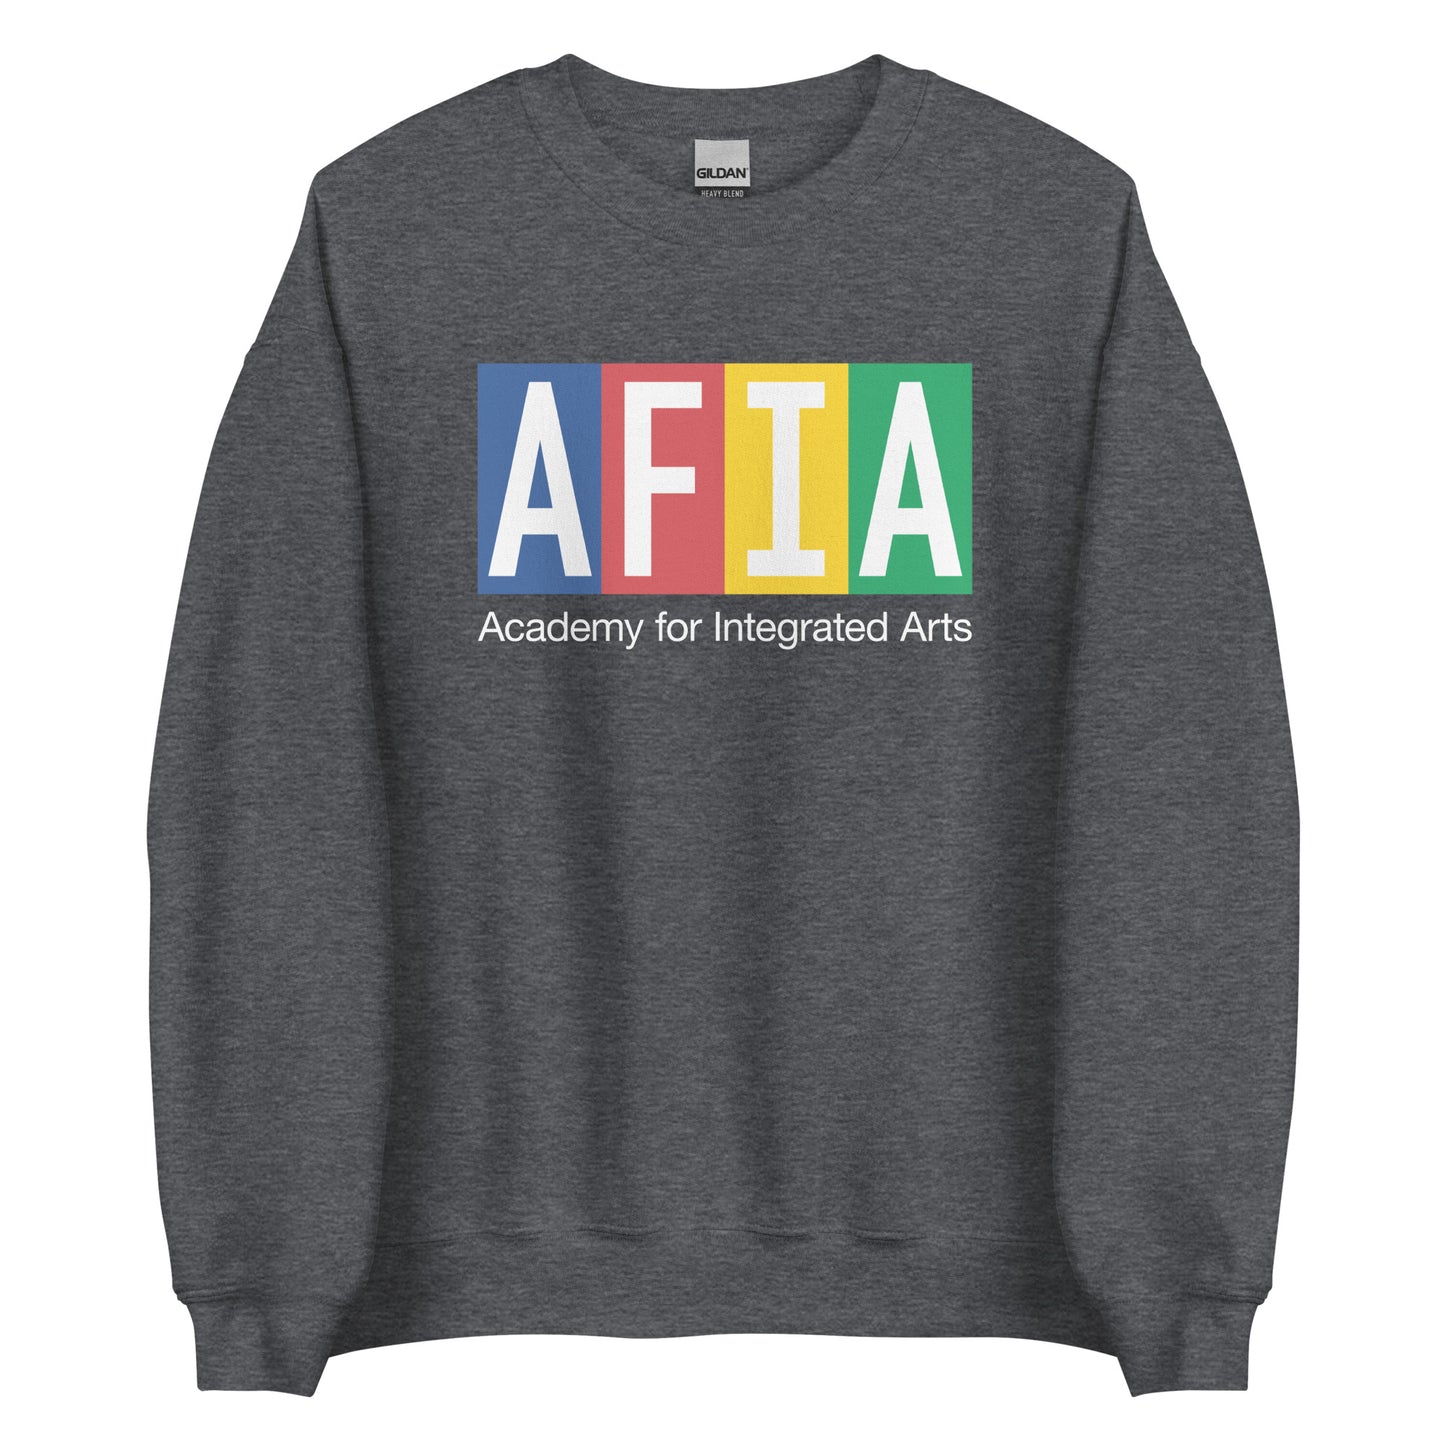 AFIA Sweatshirt - Darks